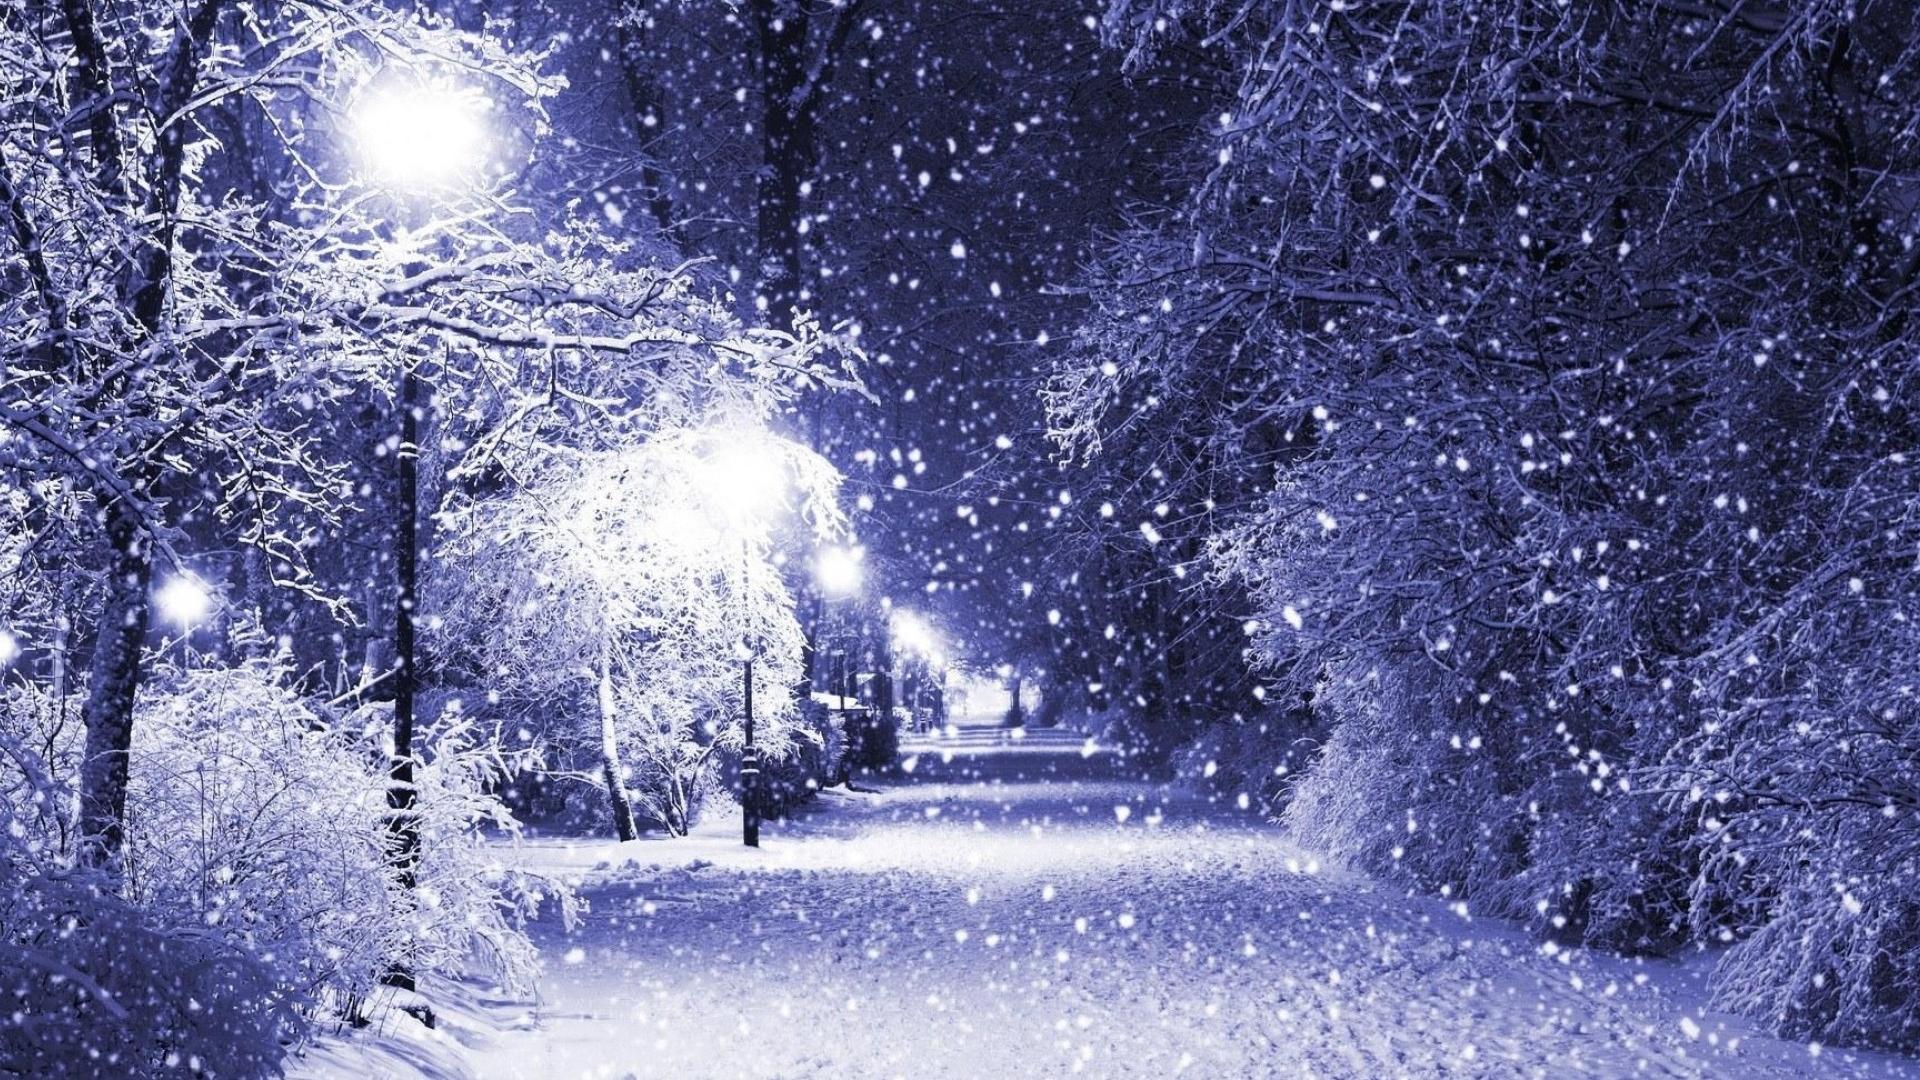 Night Snow Landscape Wallpaper High Definition Desktop